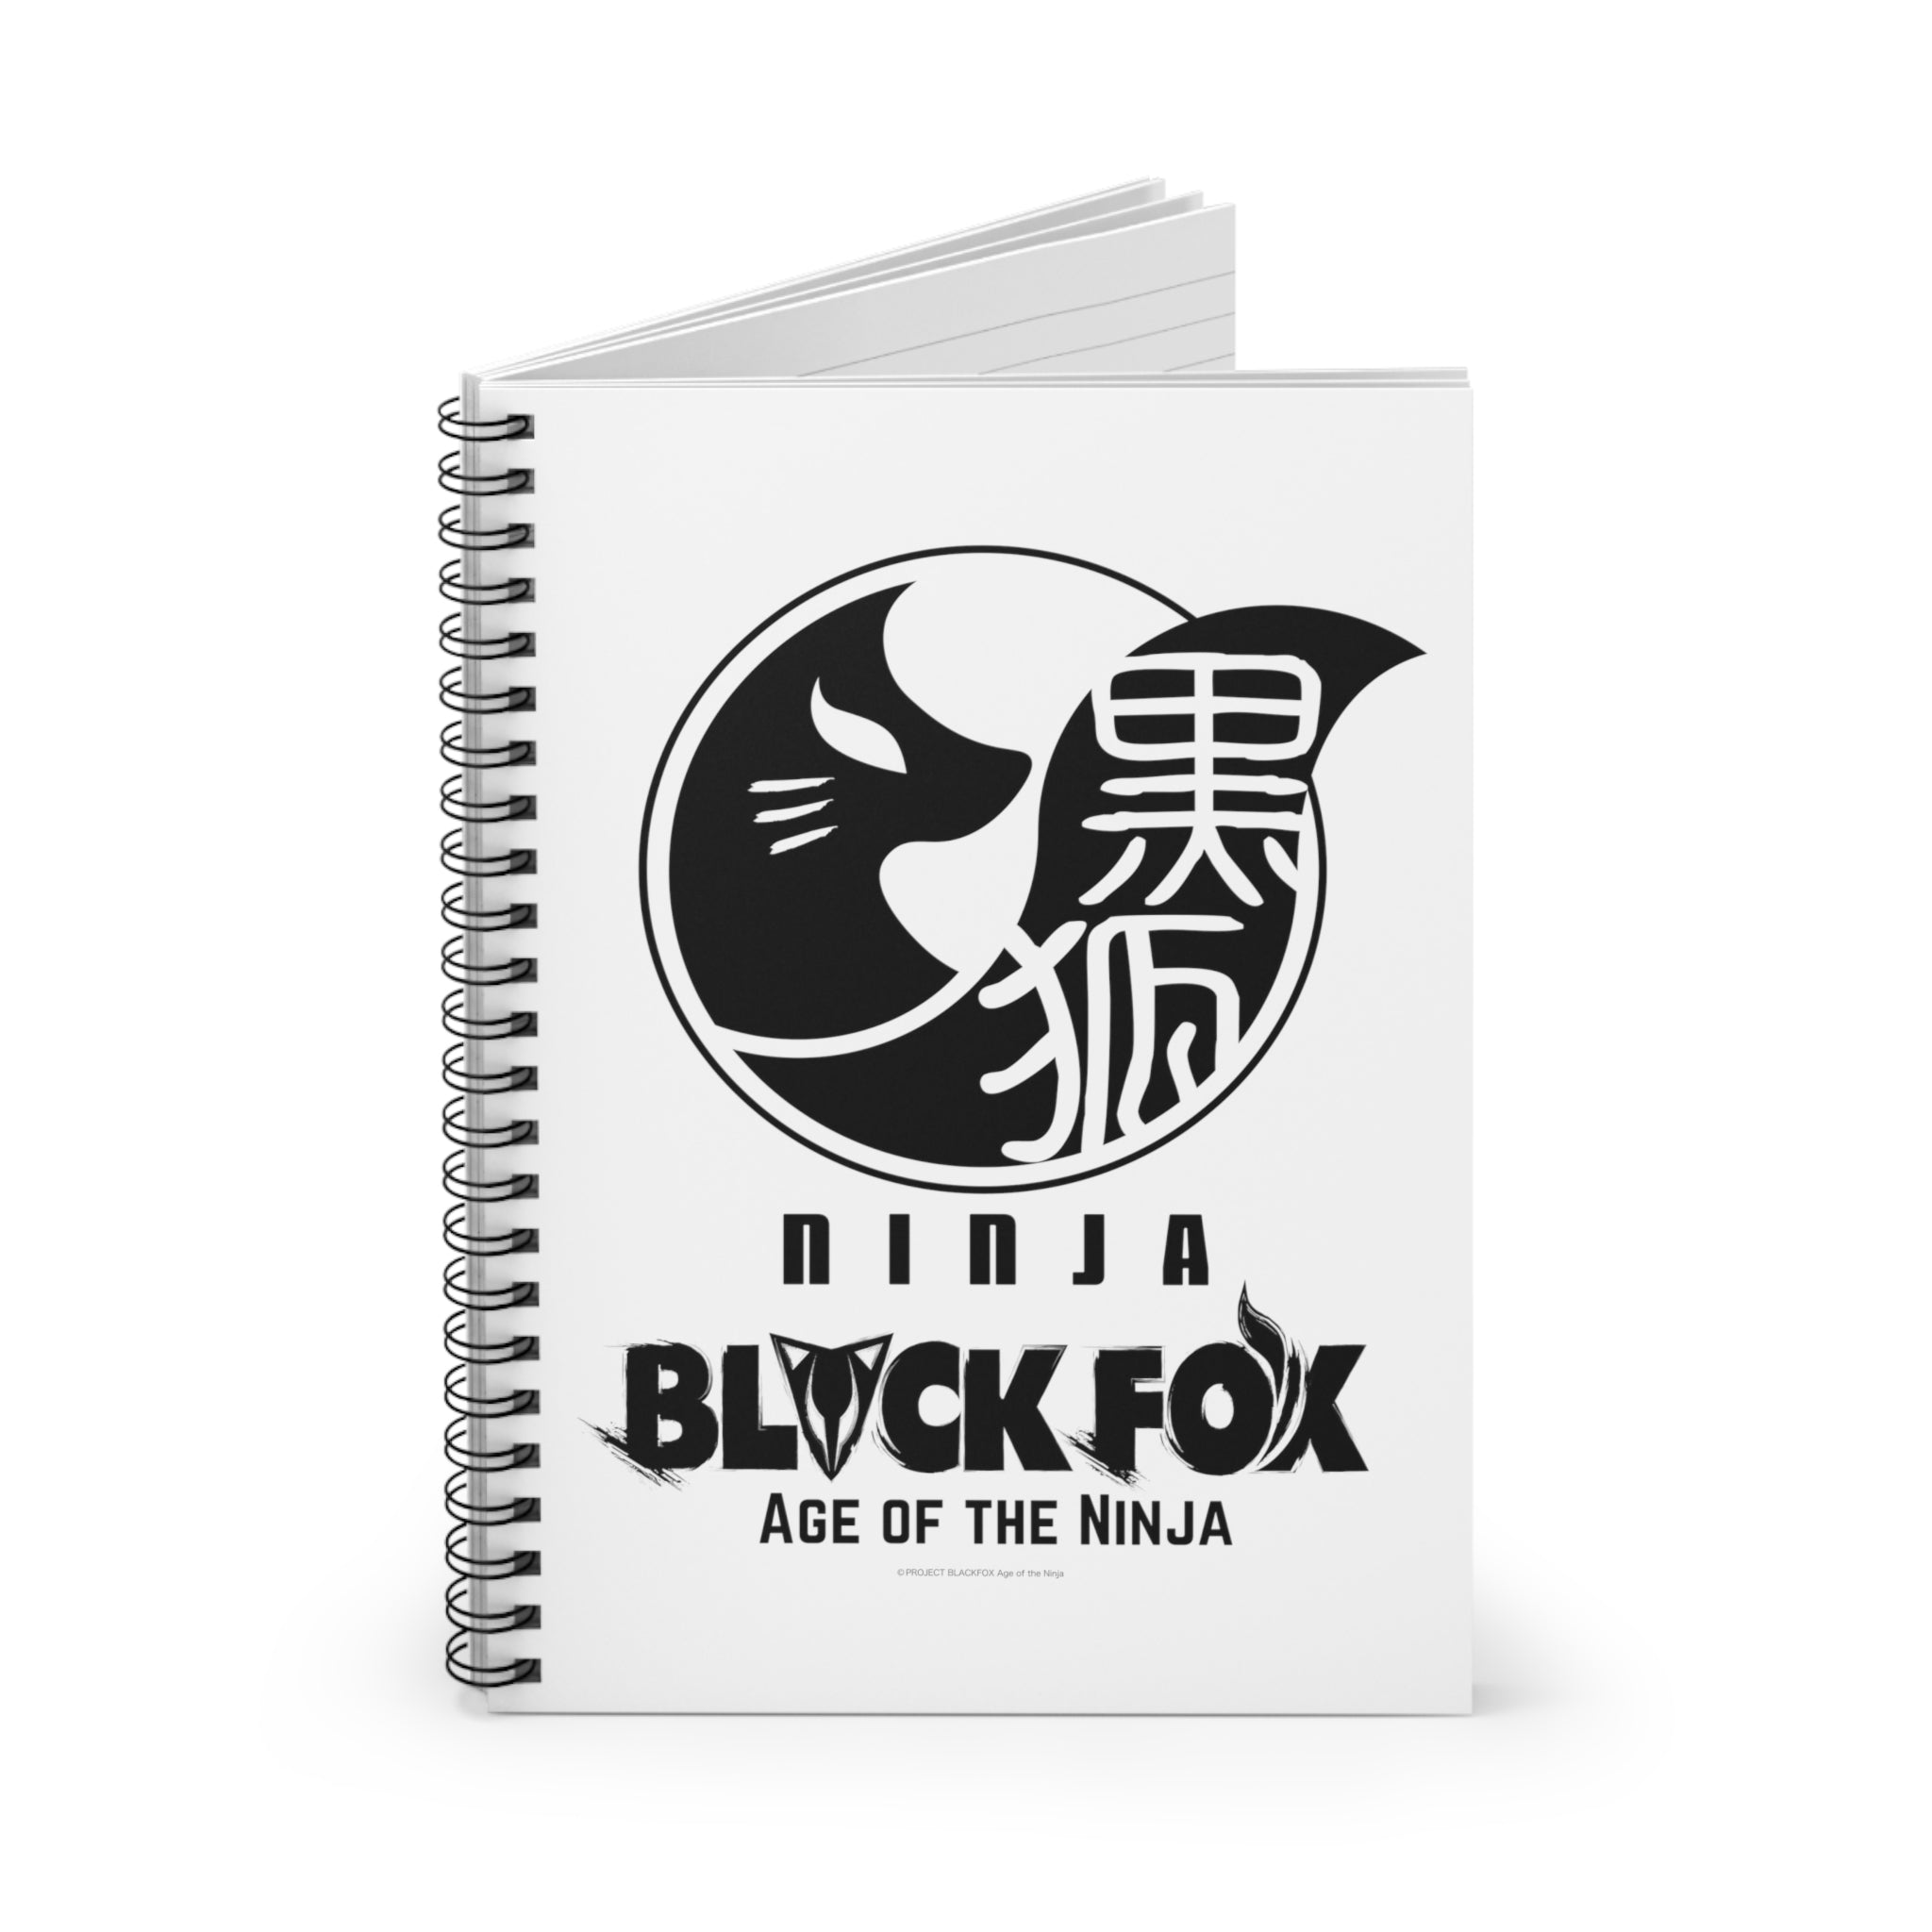 BLACKFOX LOGO Spiral Notebook - Ruled Line (White)